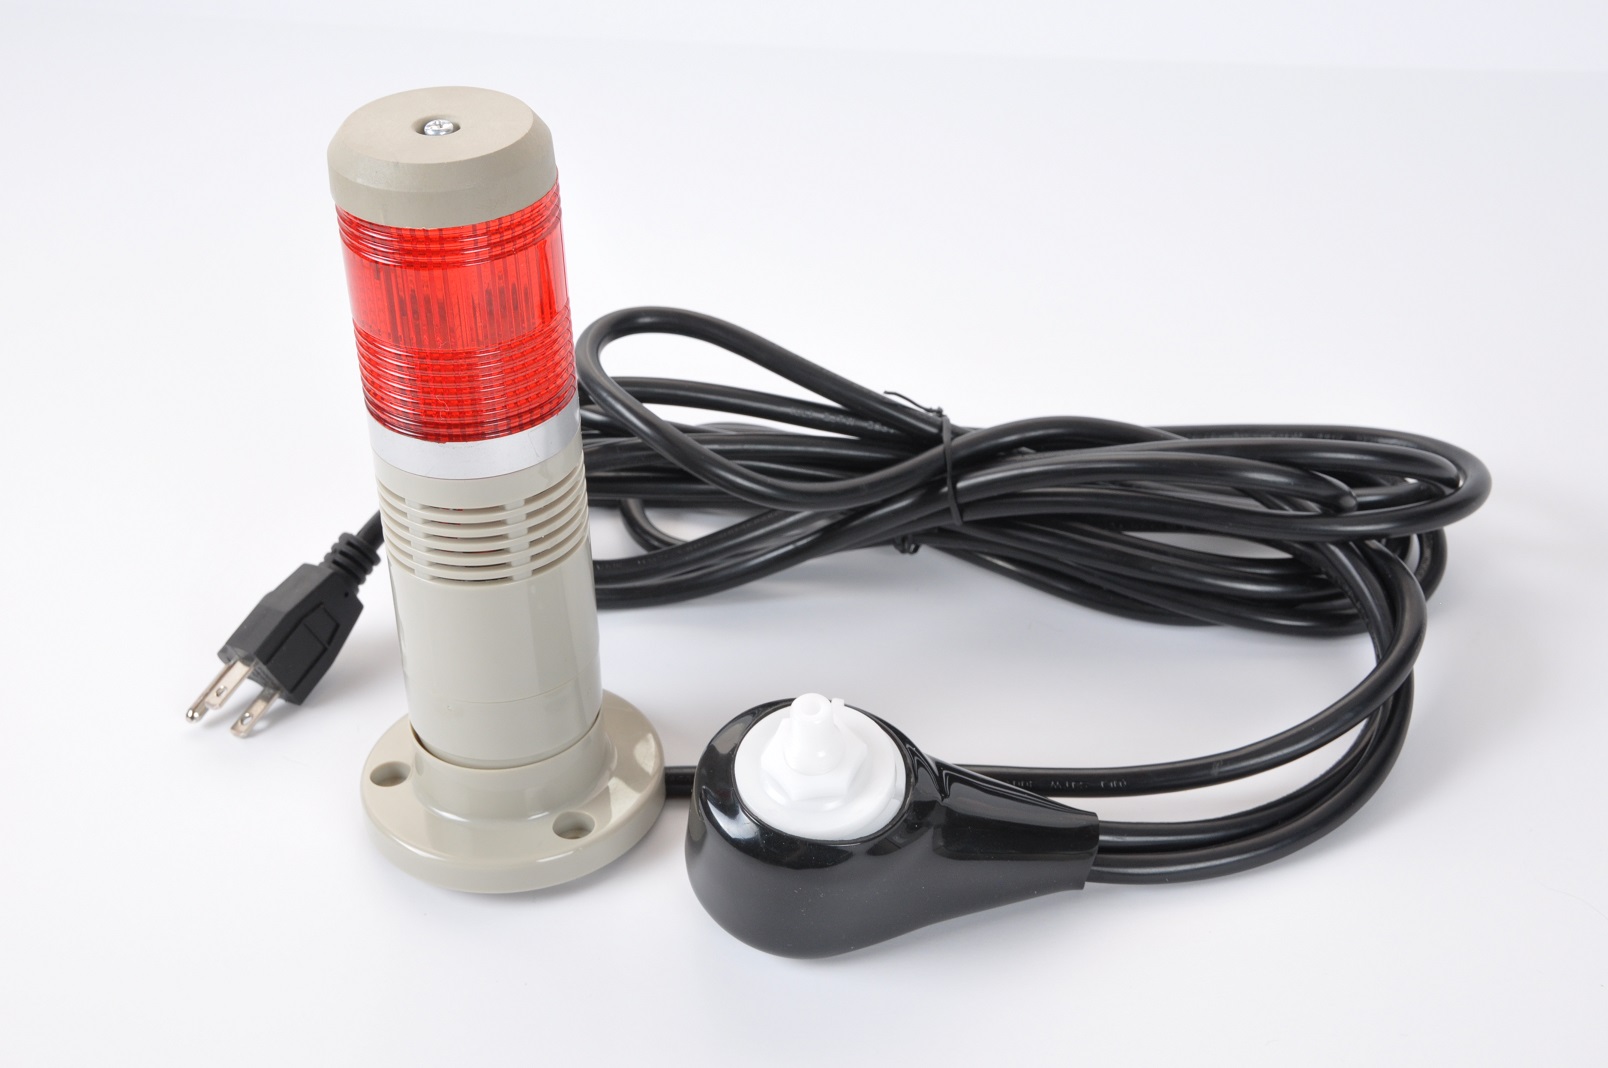 Pressure monitor alert stack light and audible alarm